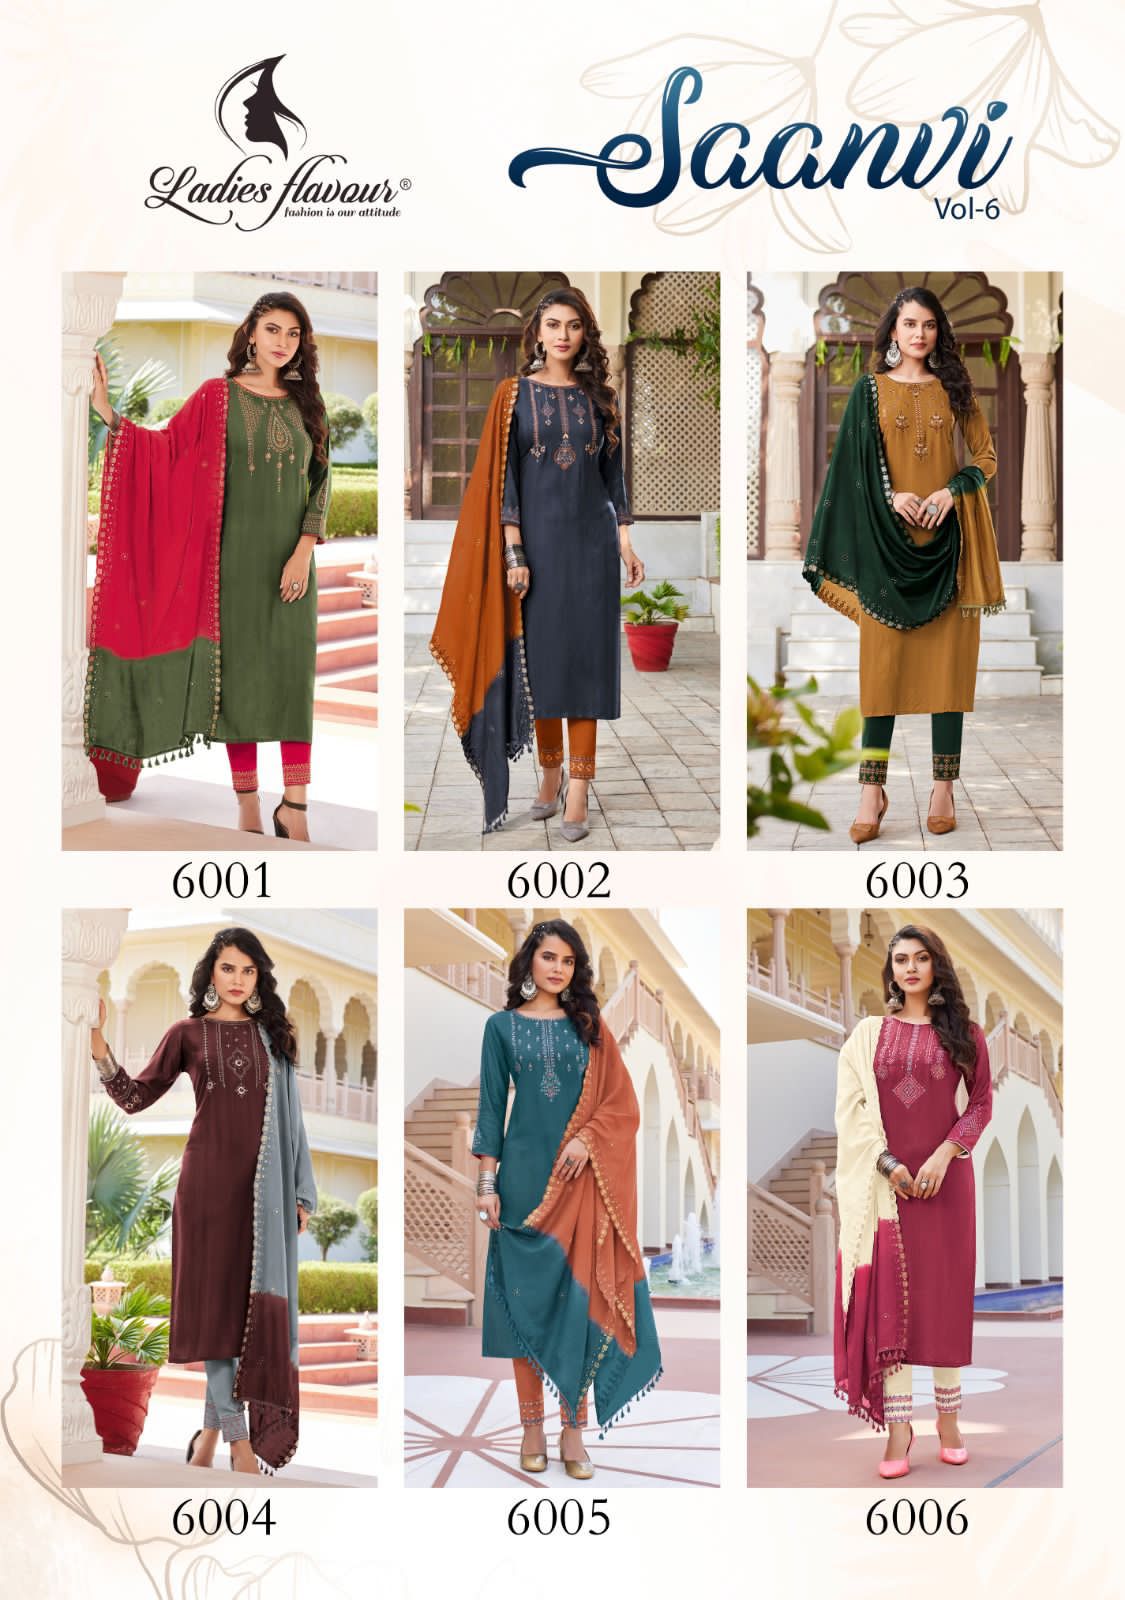 Ladies Flavour Saanvi Vol 6 collection 7